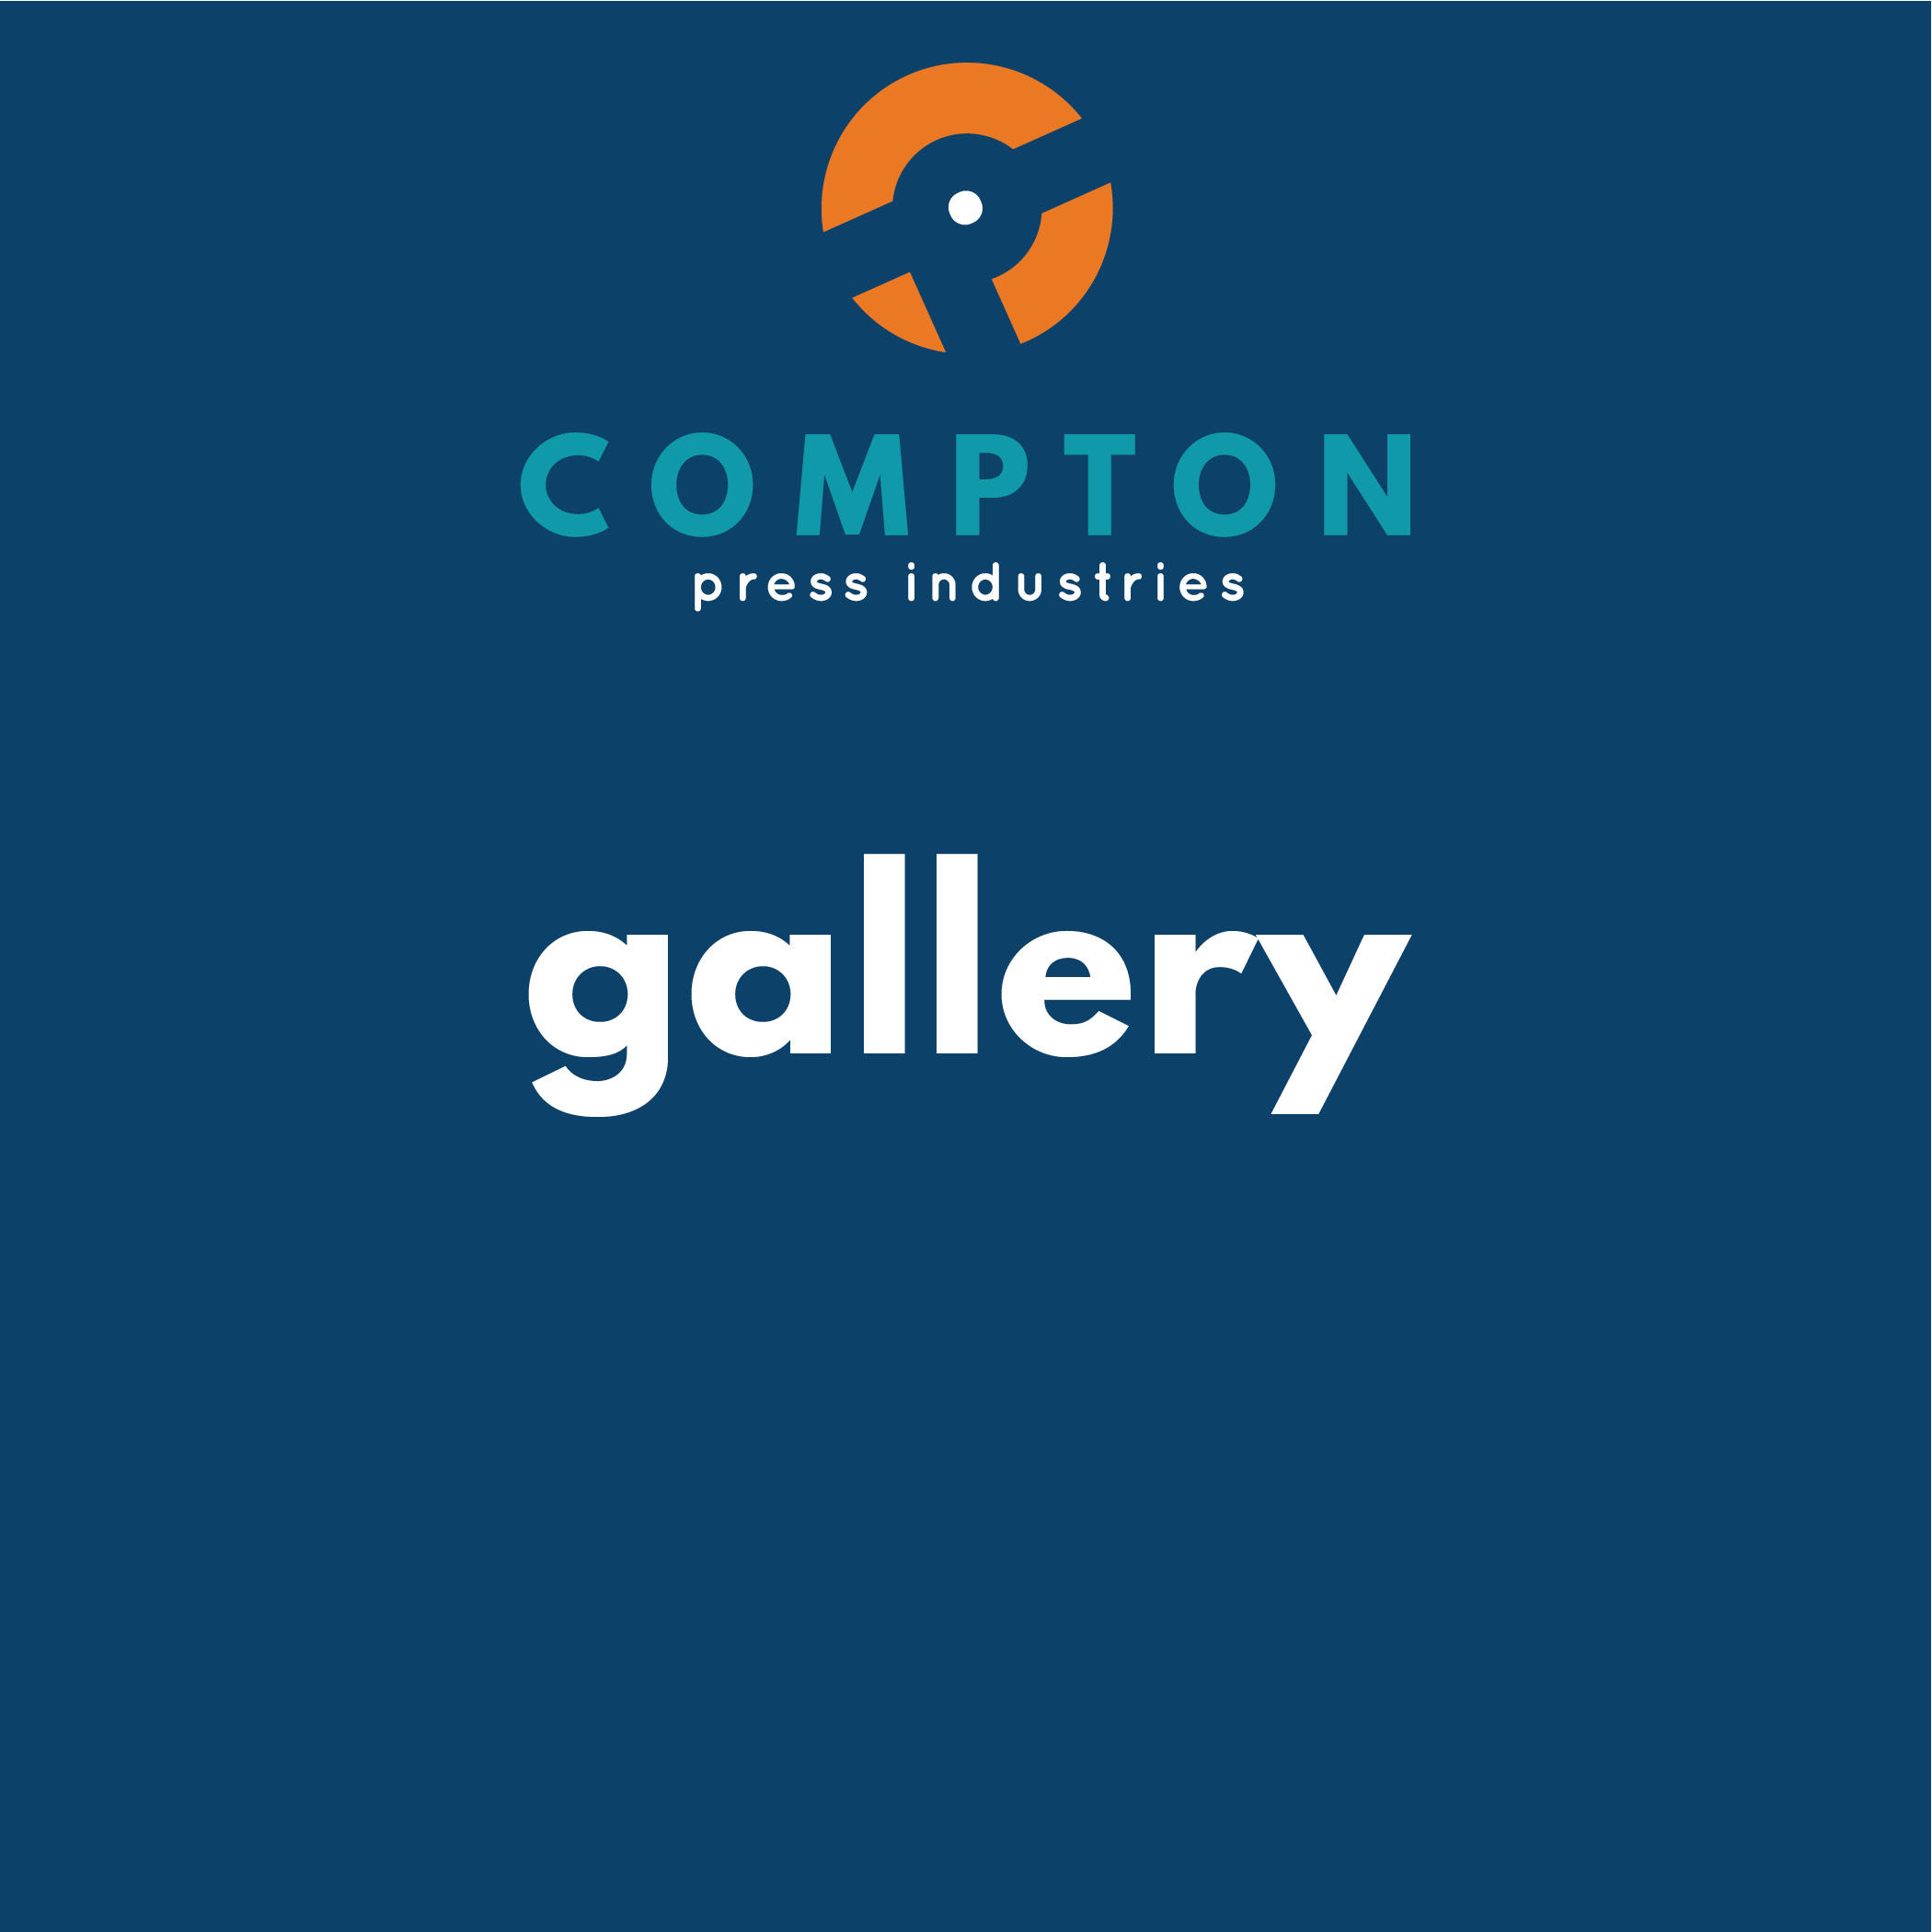 Compton Press Industries Photo